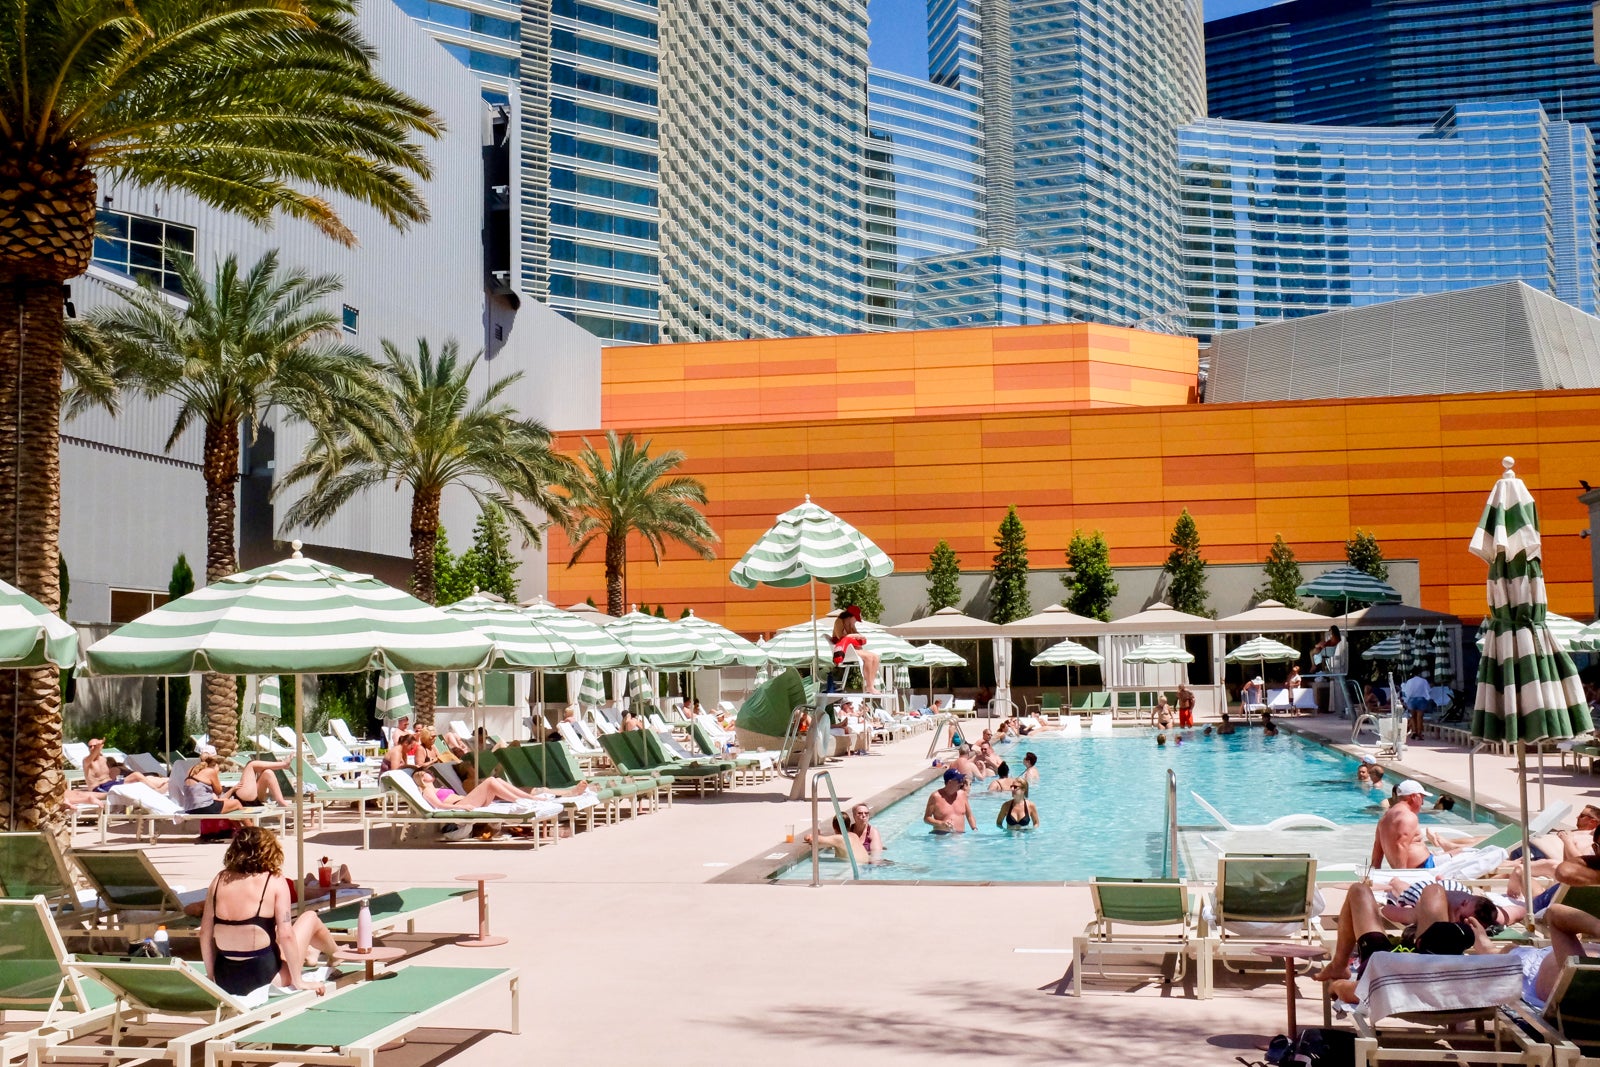 Park MGM Las Vegas — Hotel Review